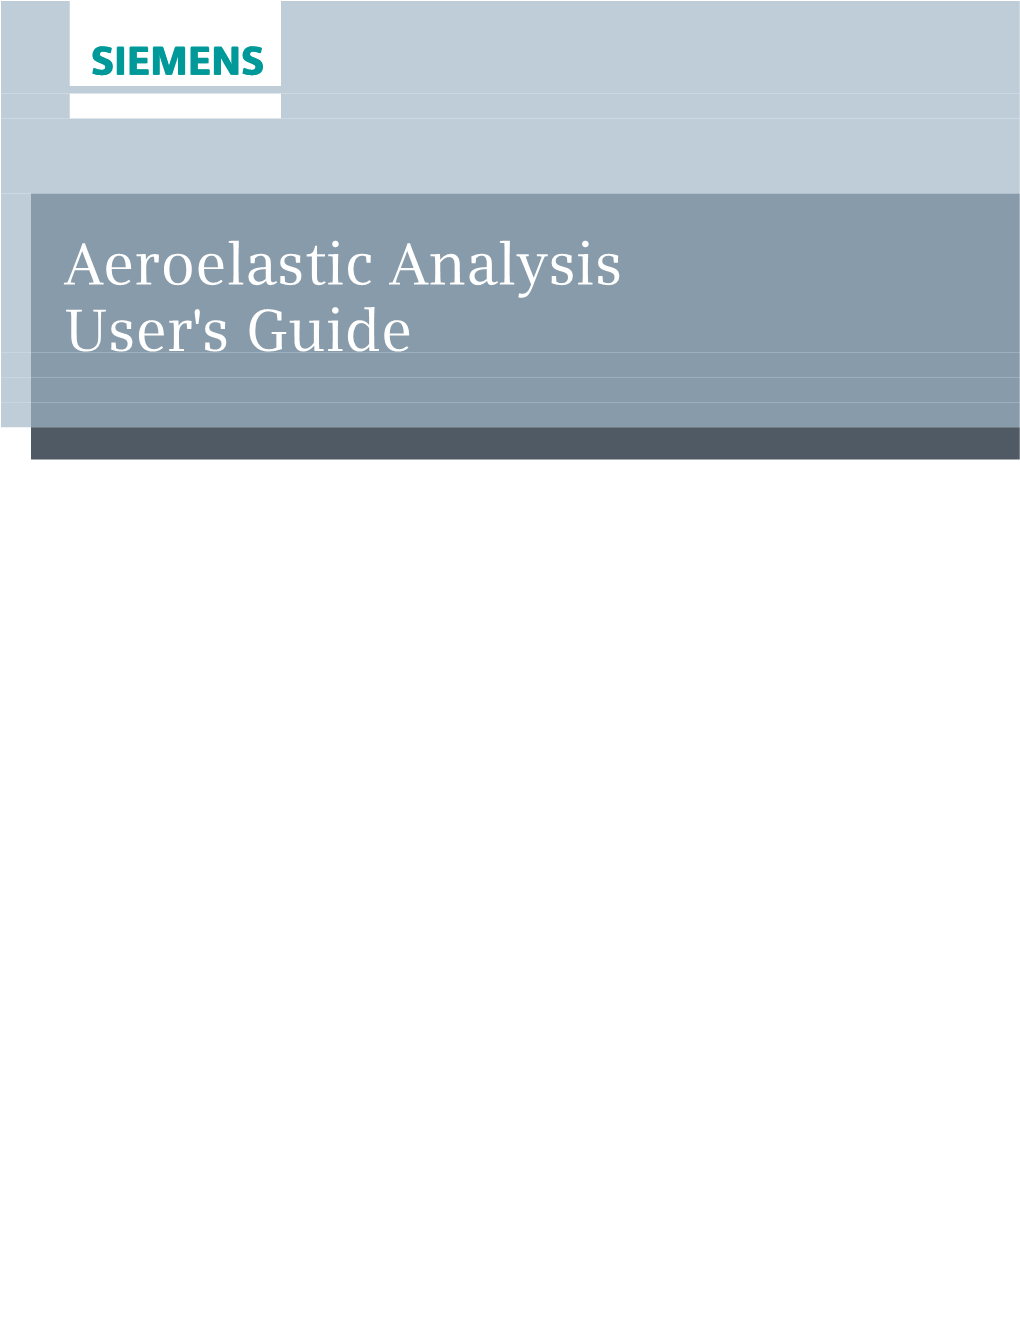 Aeroelastic Analysis User's Guide